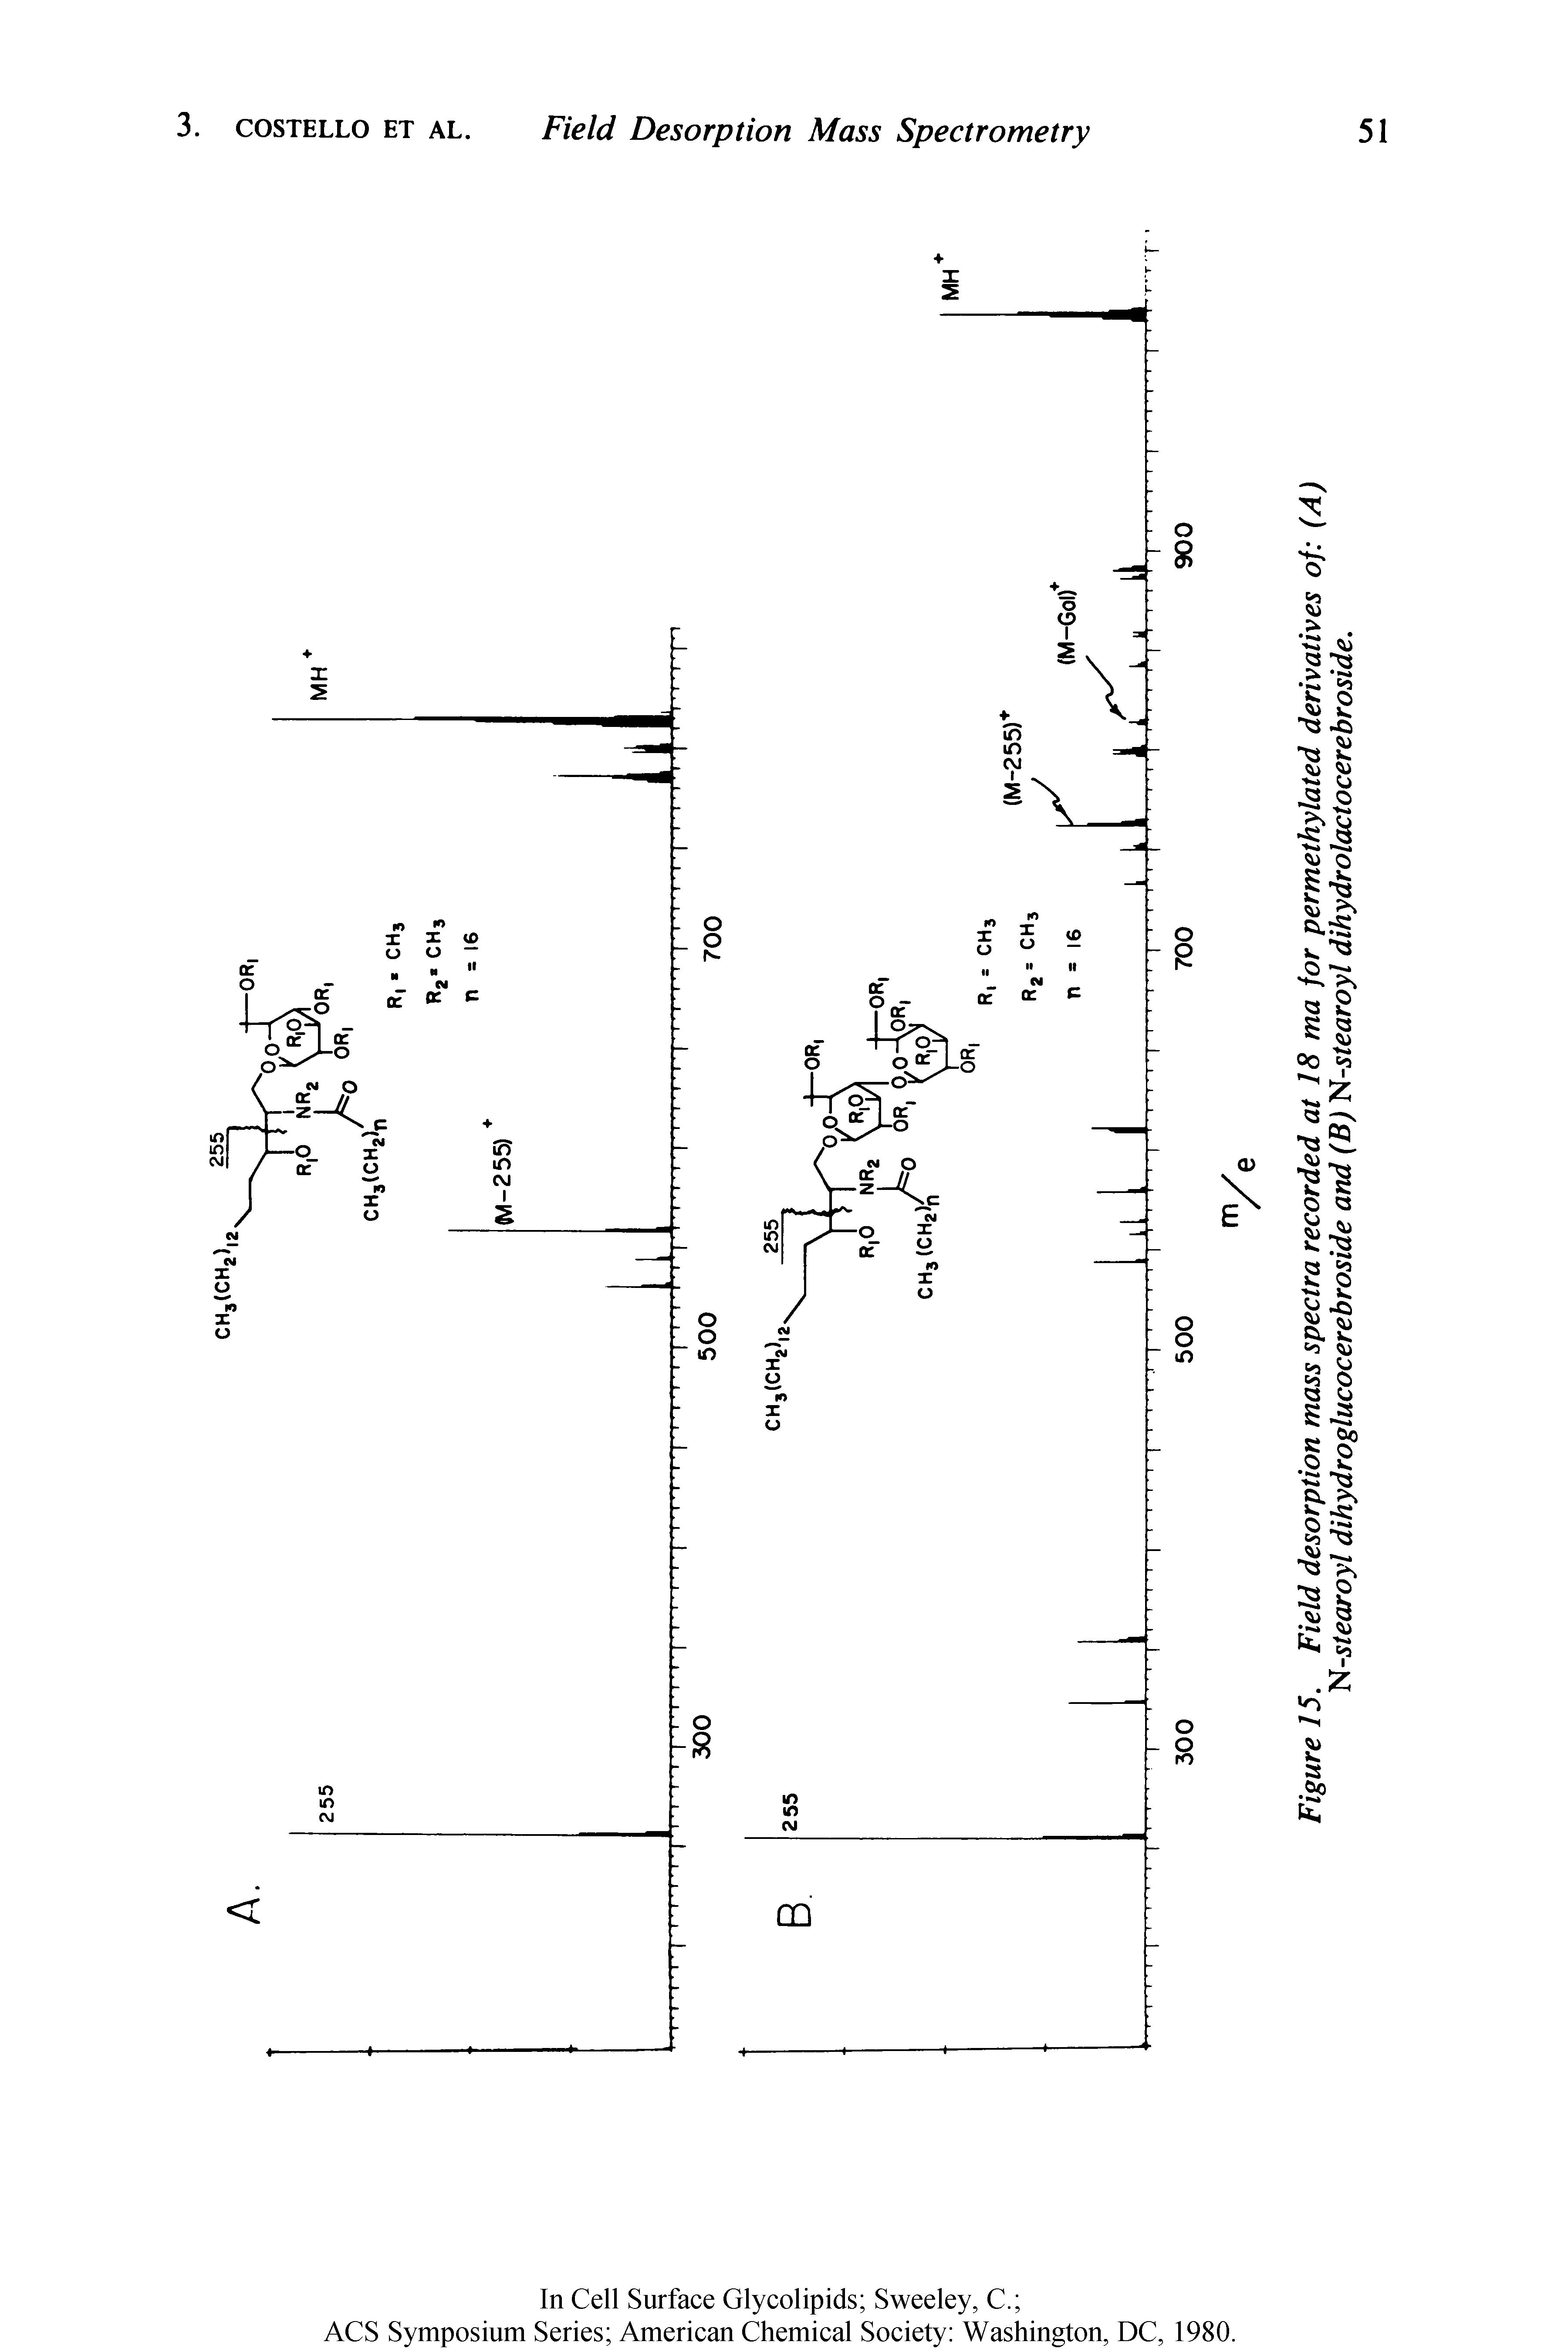 Figure 15. Field desorption mass spectra recorded at 18 ma for permethylated derivatives of (A) N-stearoyl dihydroglucocerebroside and (B) N-stearoyl dihydrolactocerebroside.